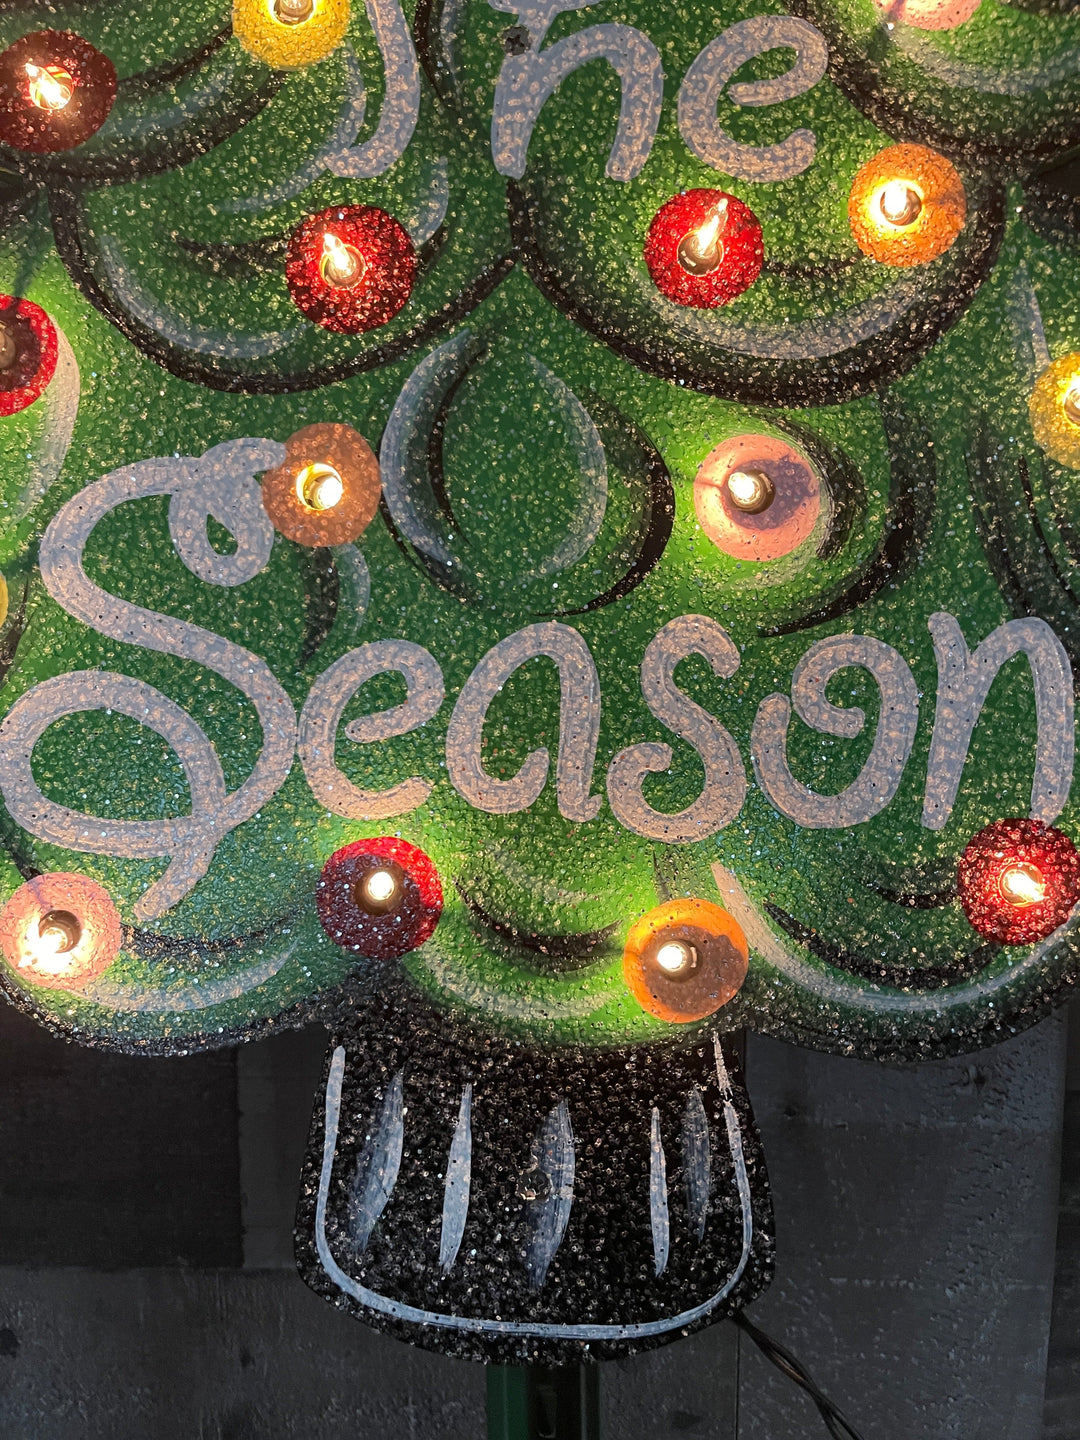 Lighted Tis the Season Tree Yard Art Decoration